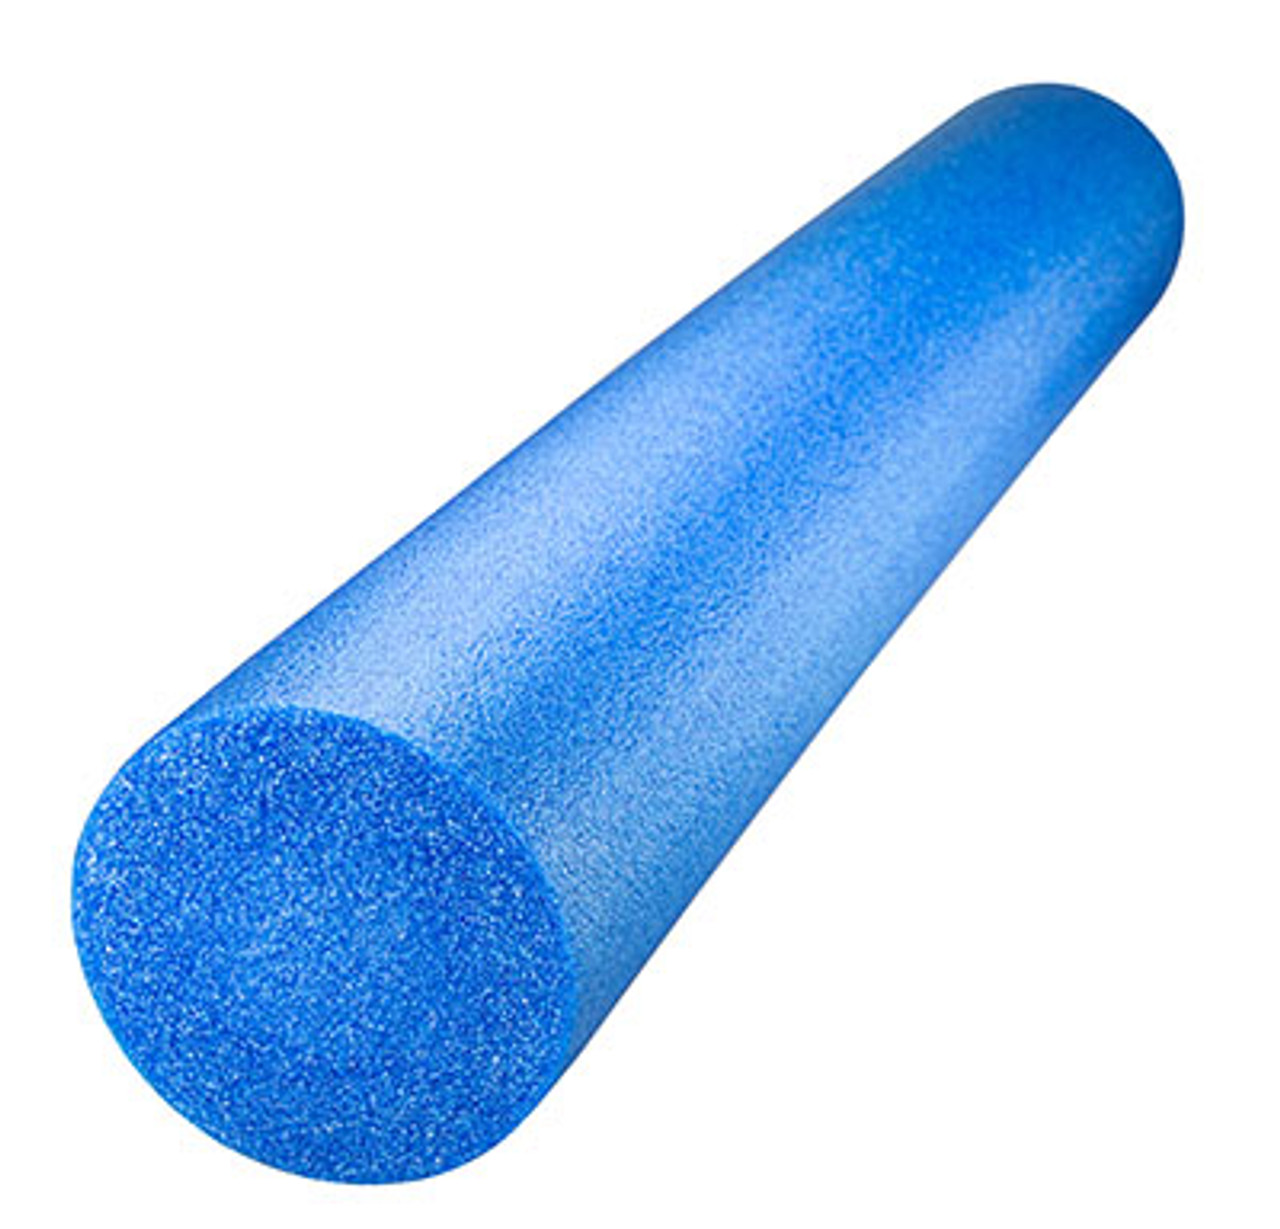 CanDo Foam Roller - Blue PE foam - 6 x 36 